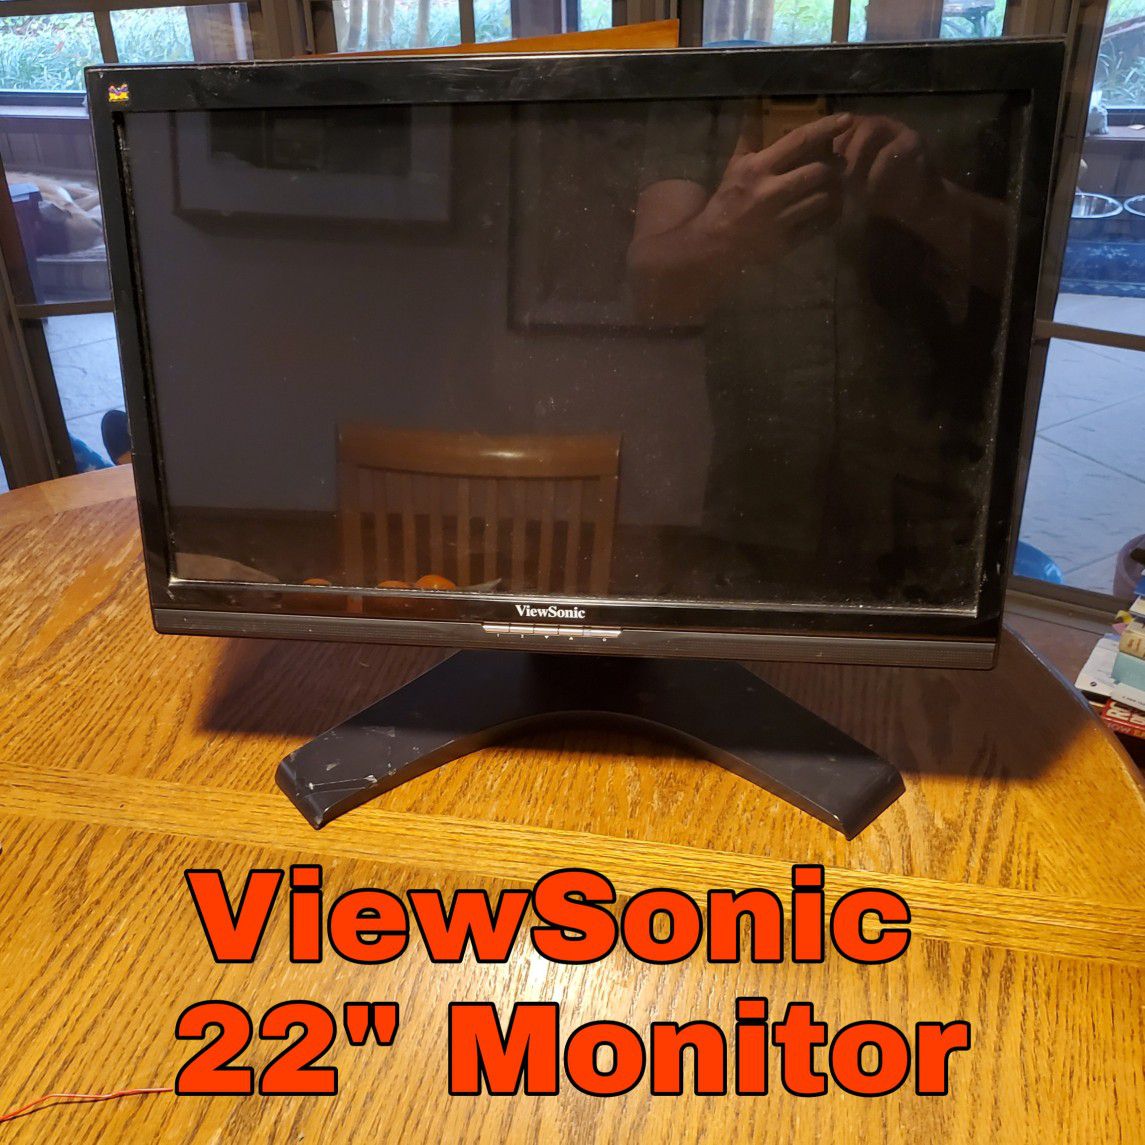 Viewsonic VX2258WM 1920 x 1080 Resolution 22" WideScreen LCD Flat Panel Computer Monitor Display